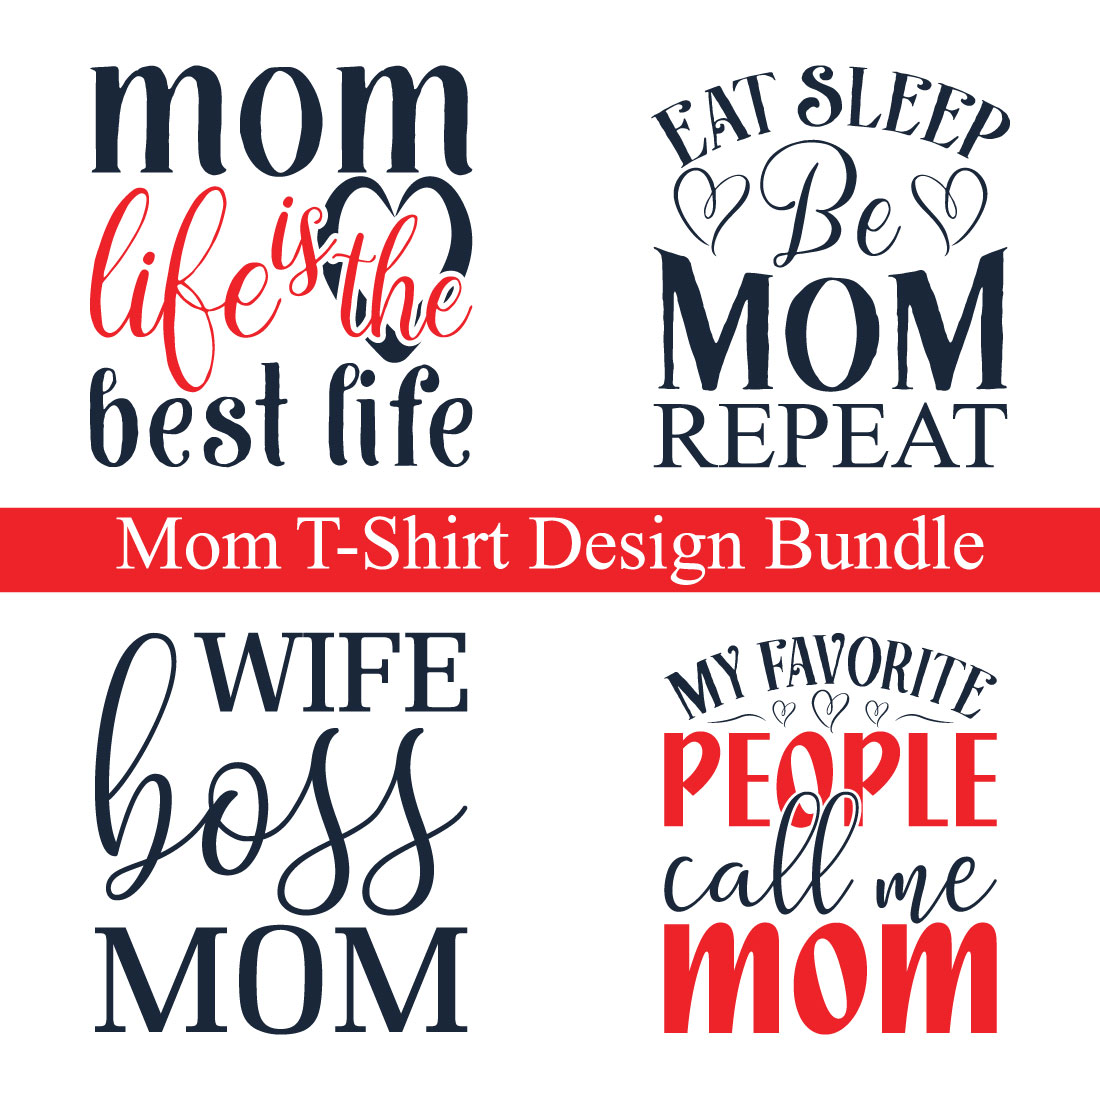 Mom T Shirt Design Bundle cover image.